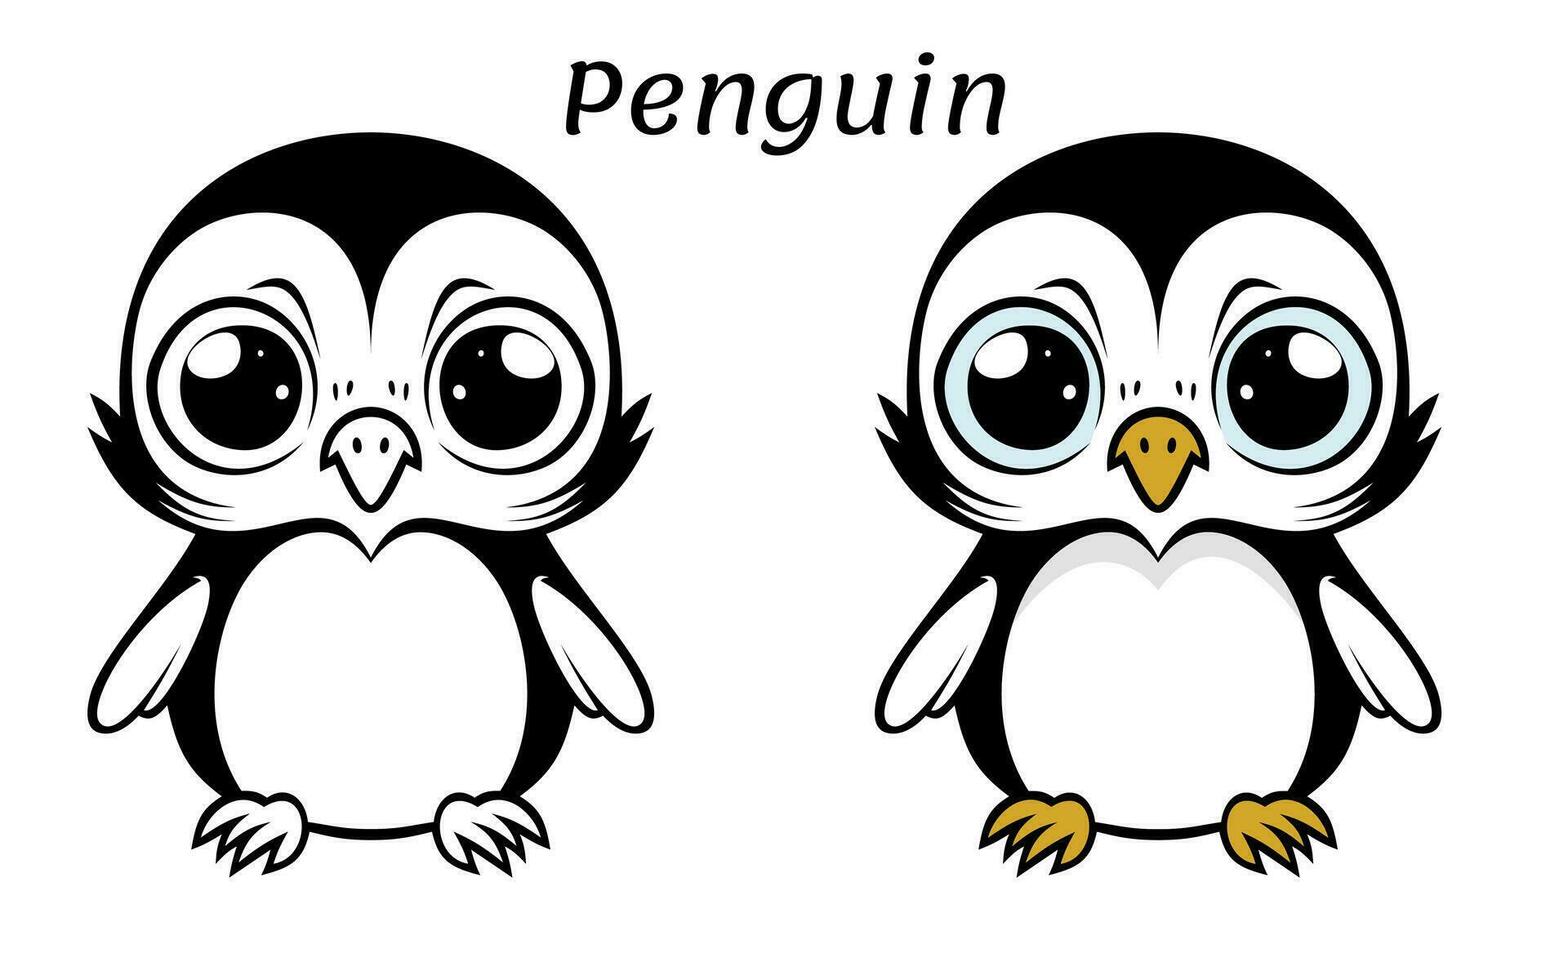 Cute Penguin Animal Coloring Book Illustration vector